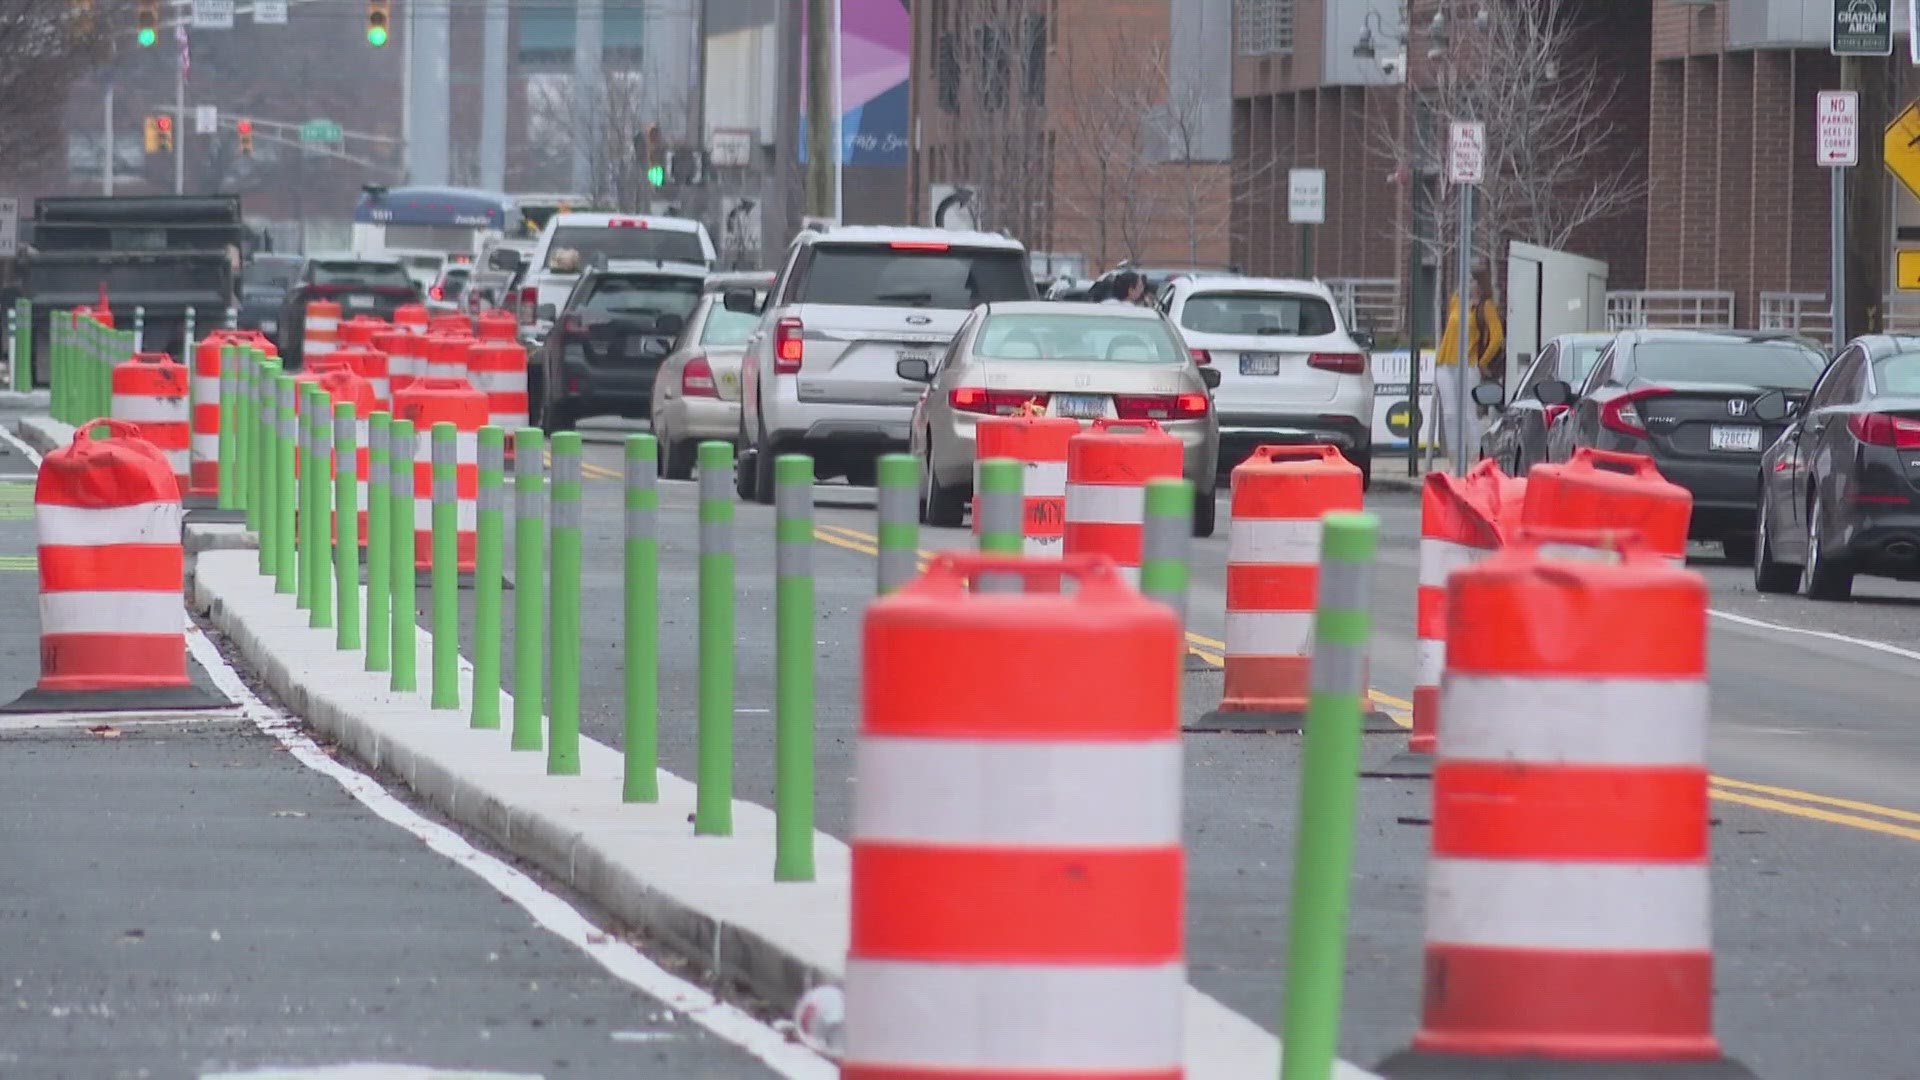 Upgrades include protected bike lanes and rectangular, rapid-flashing beacon crosswalk signals.